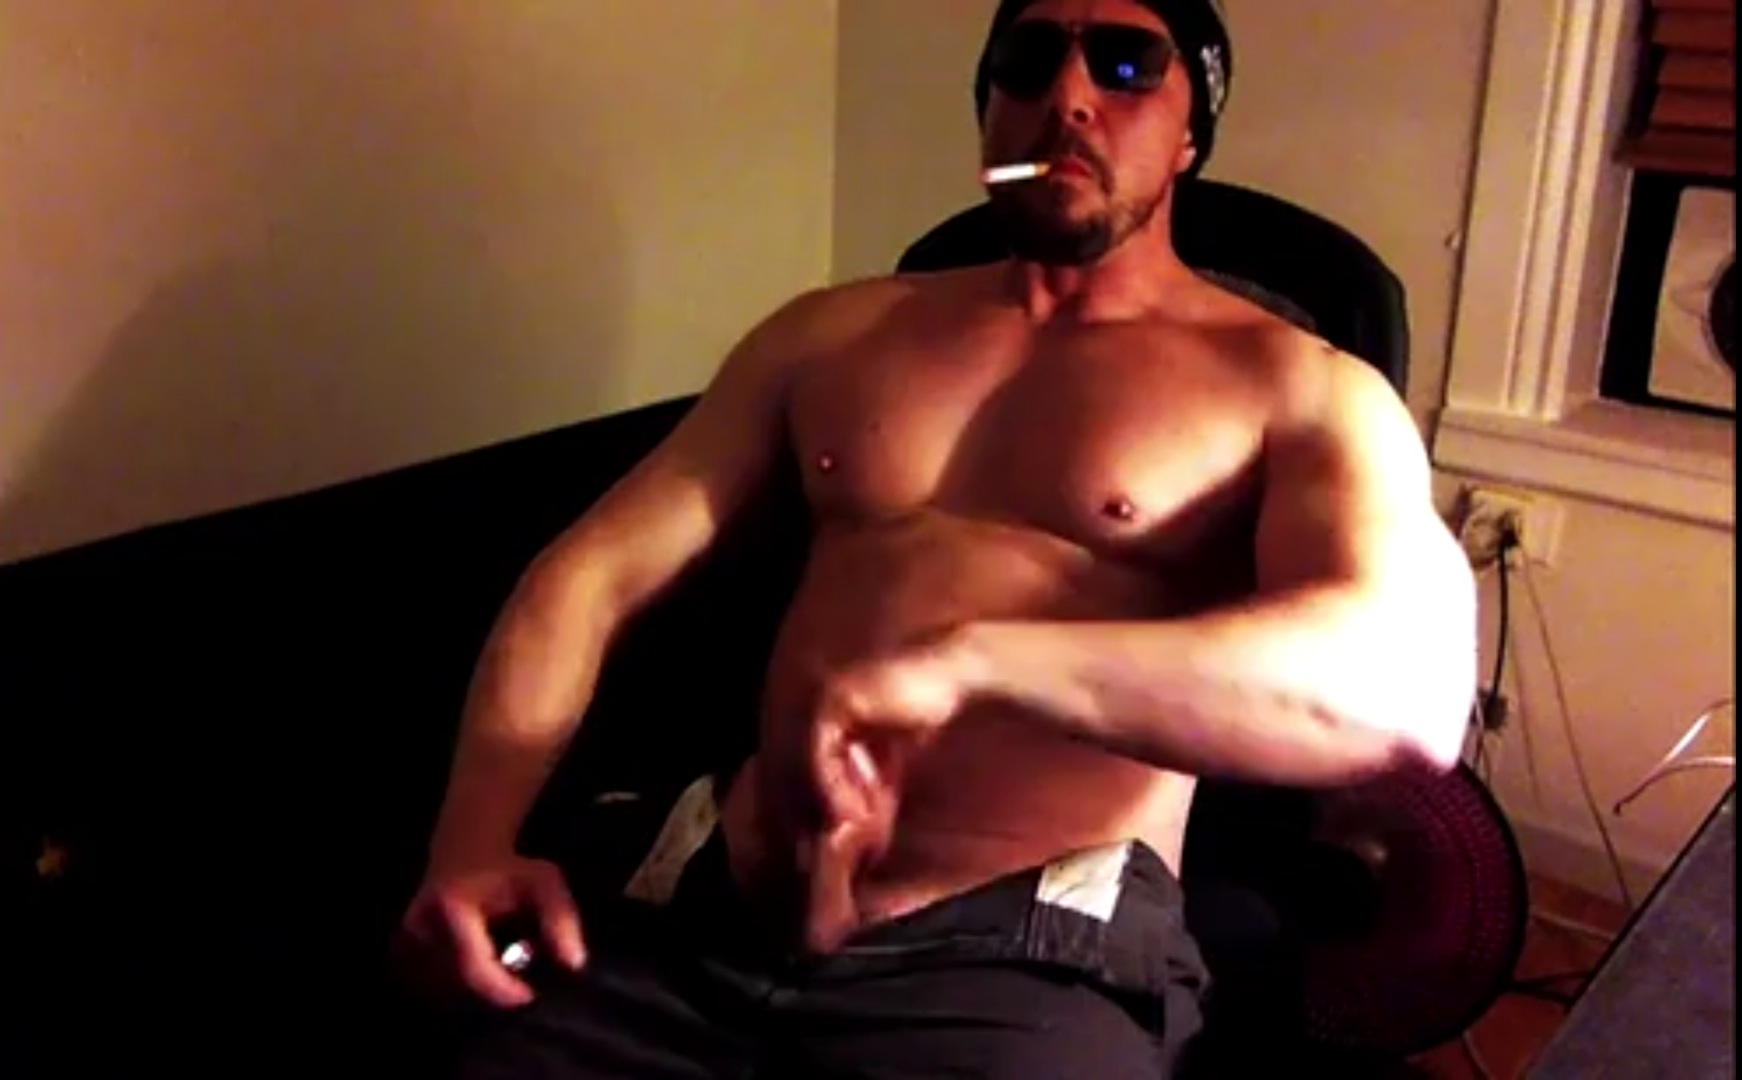 Tough Guy Smoking shirtless and Playing With His Cock